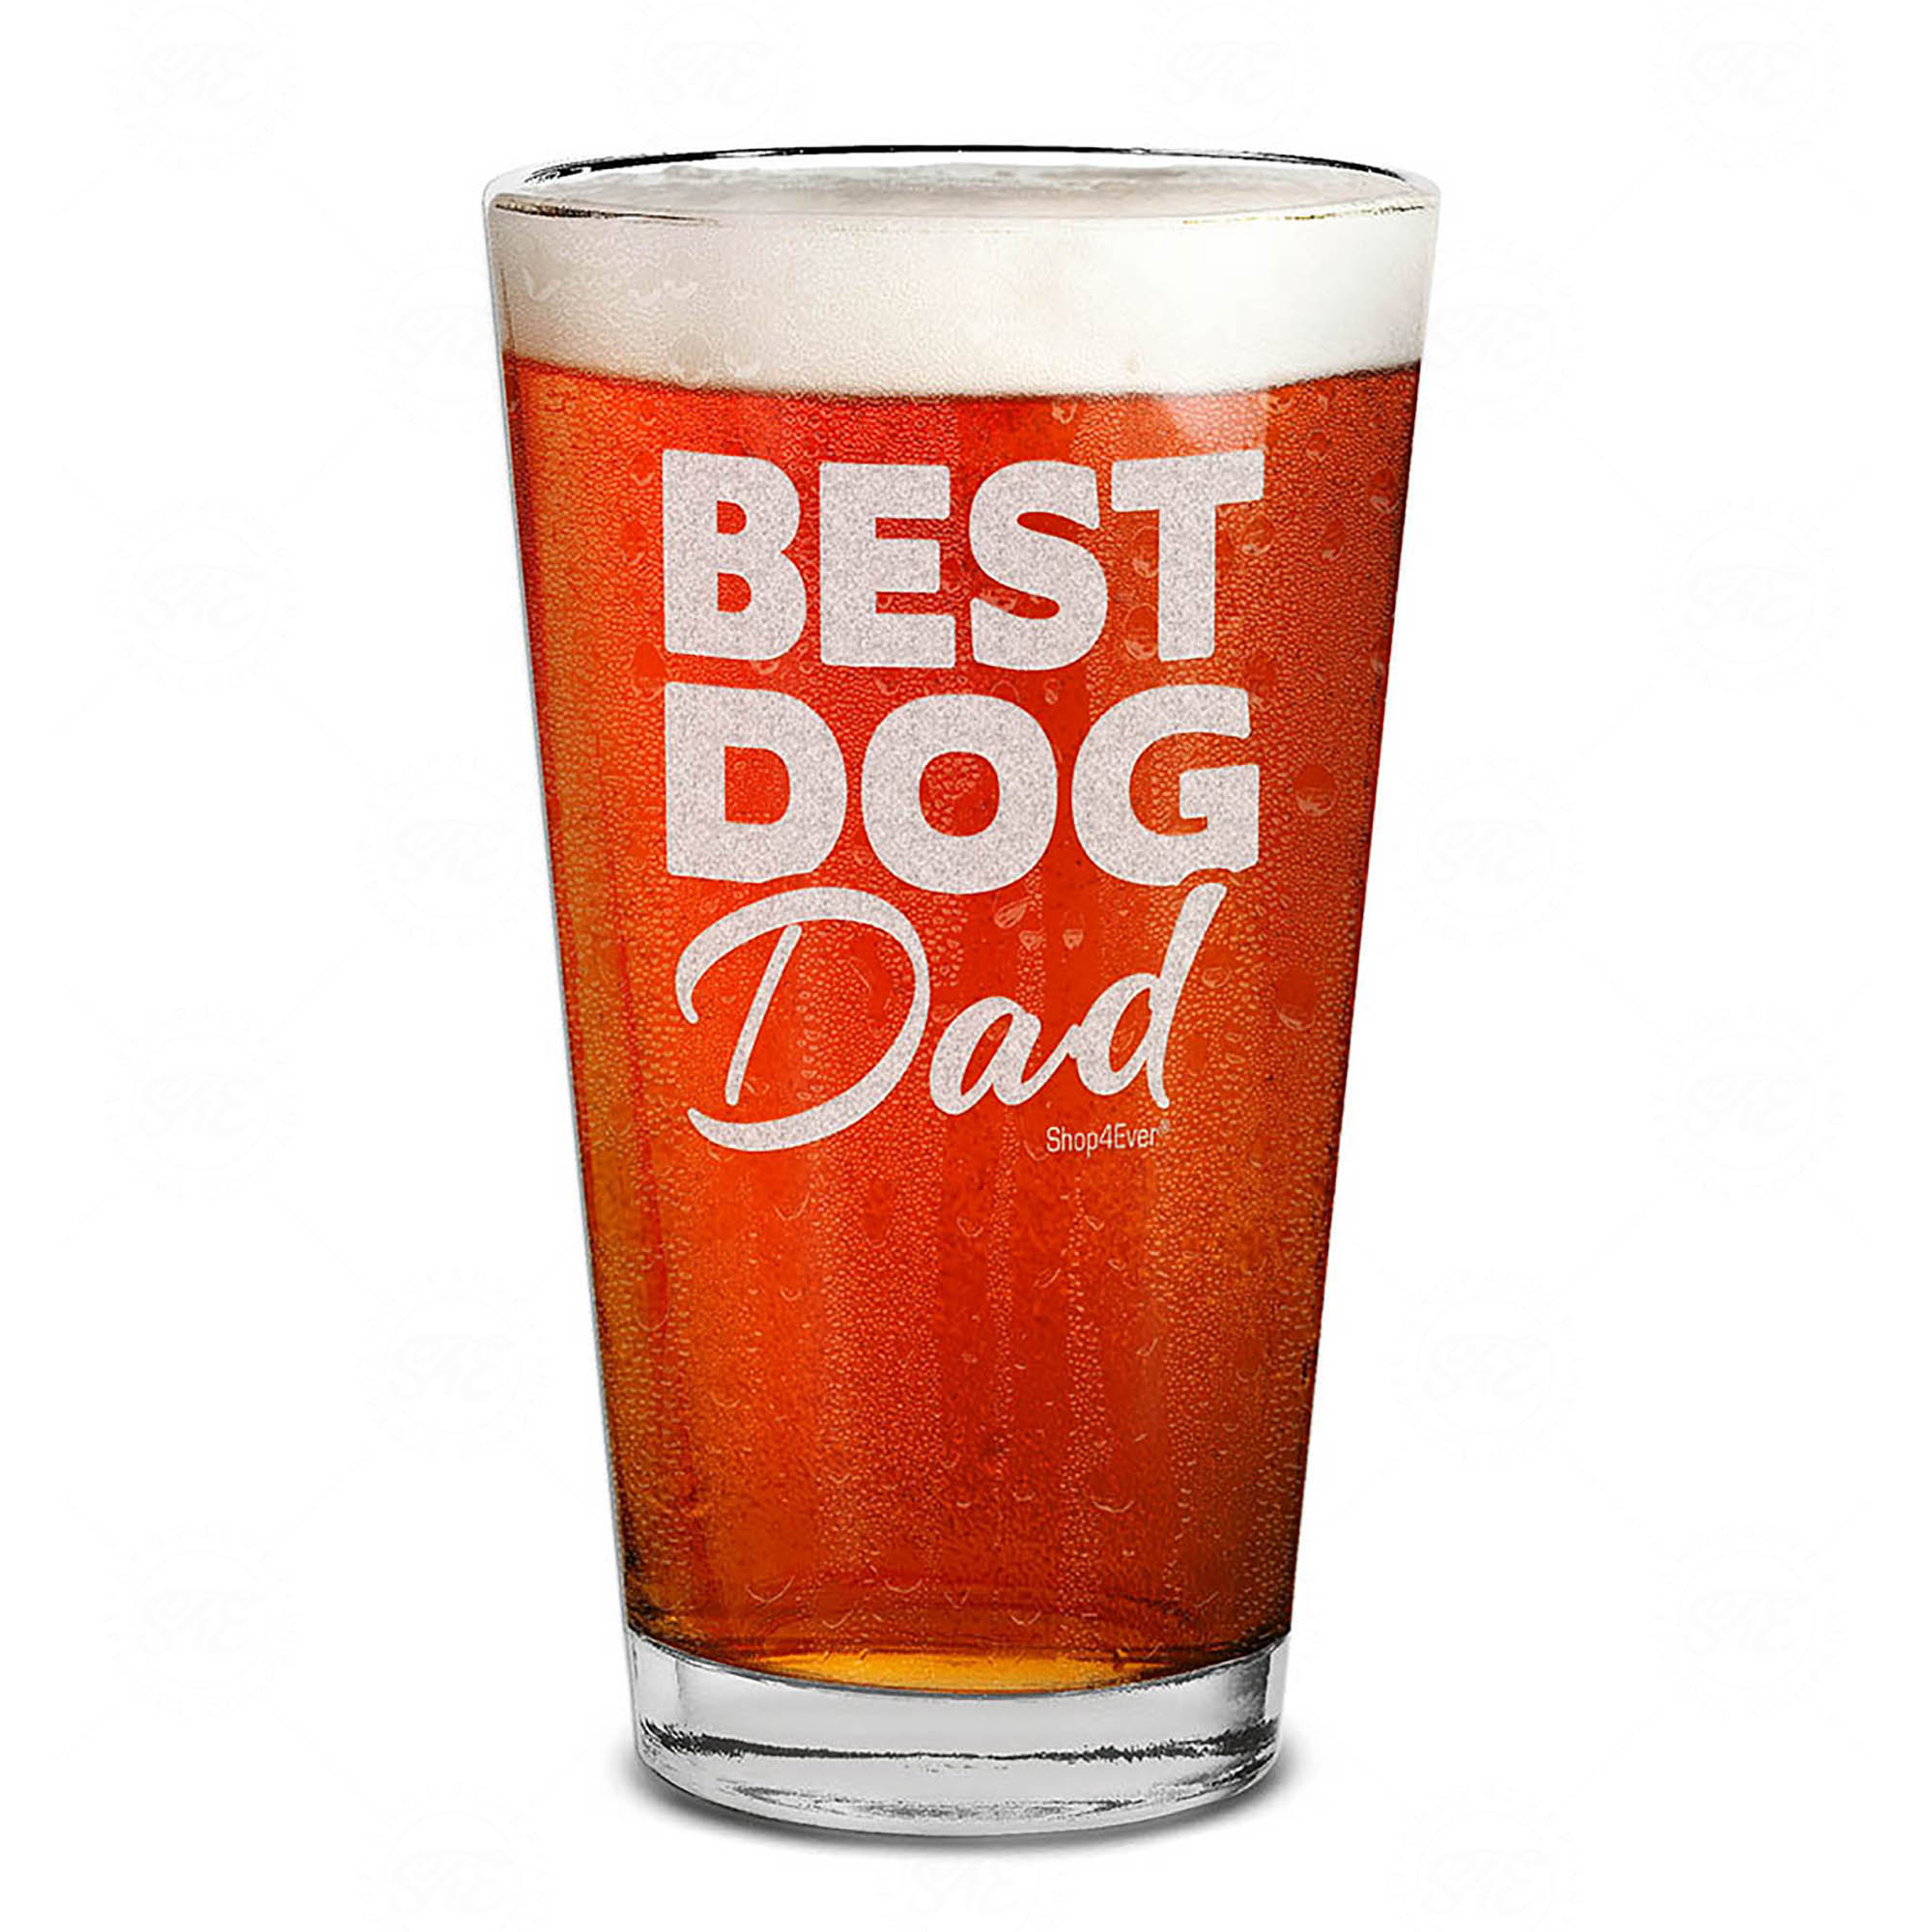 Best Dog Dad Engraved Beer Pint Glass